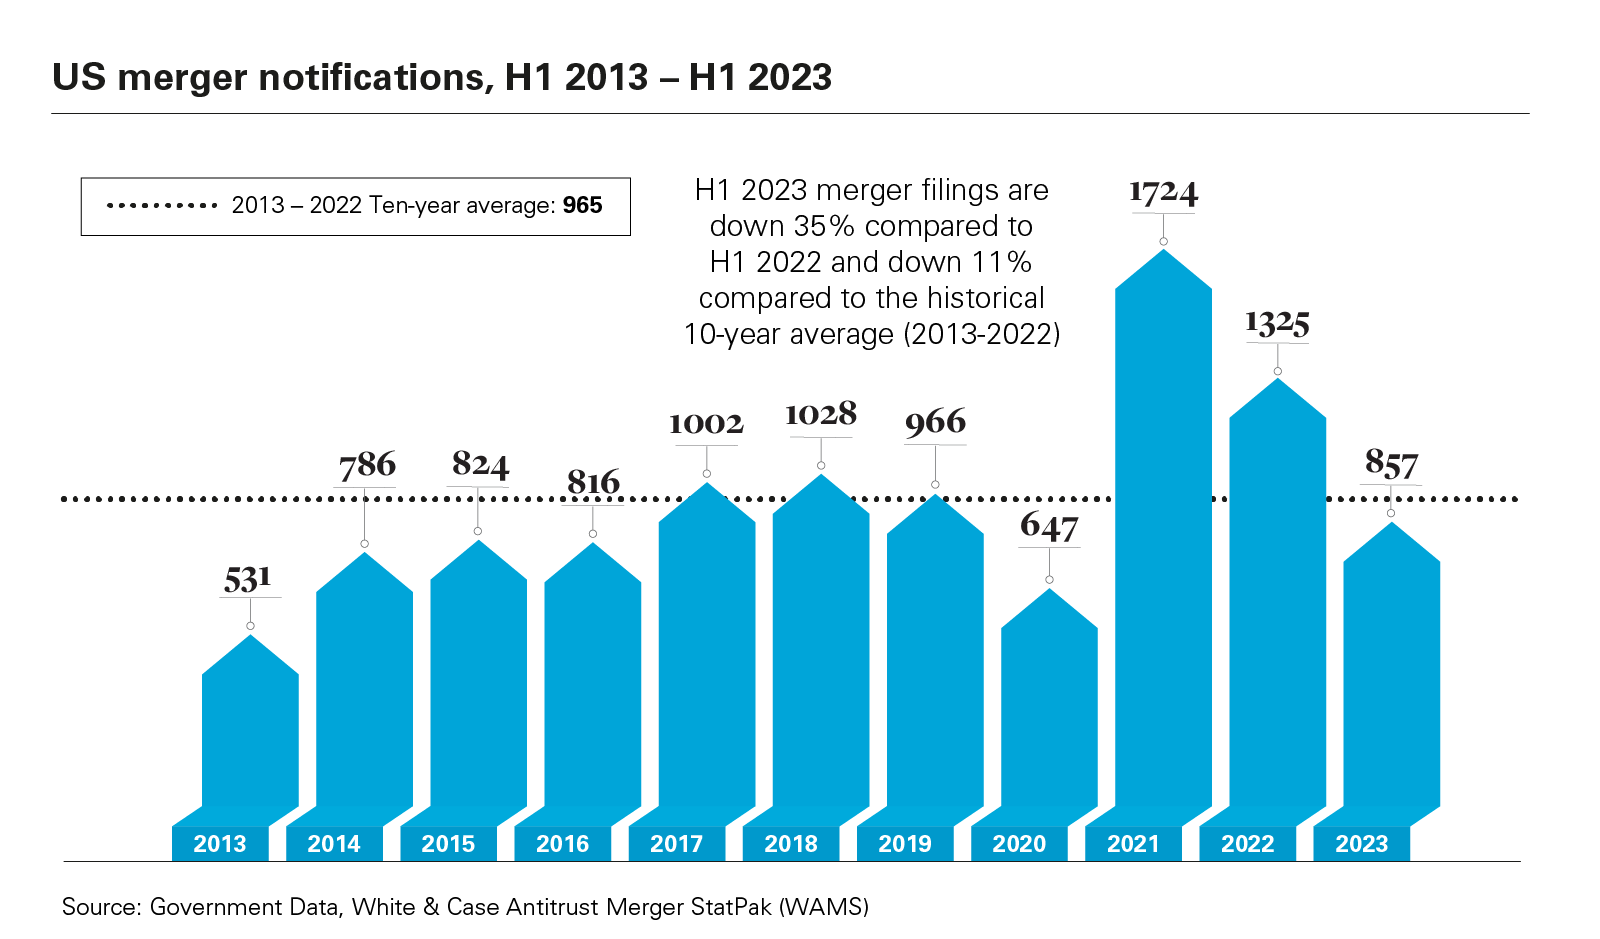 US merger notifications, H1 2013 - H1 2023 graph